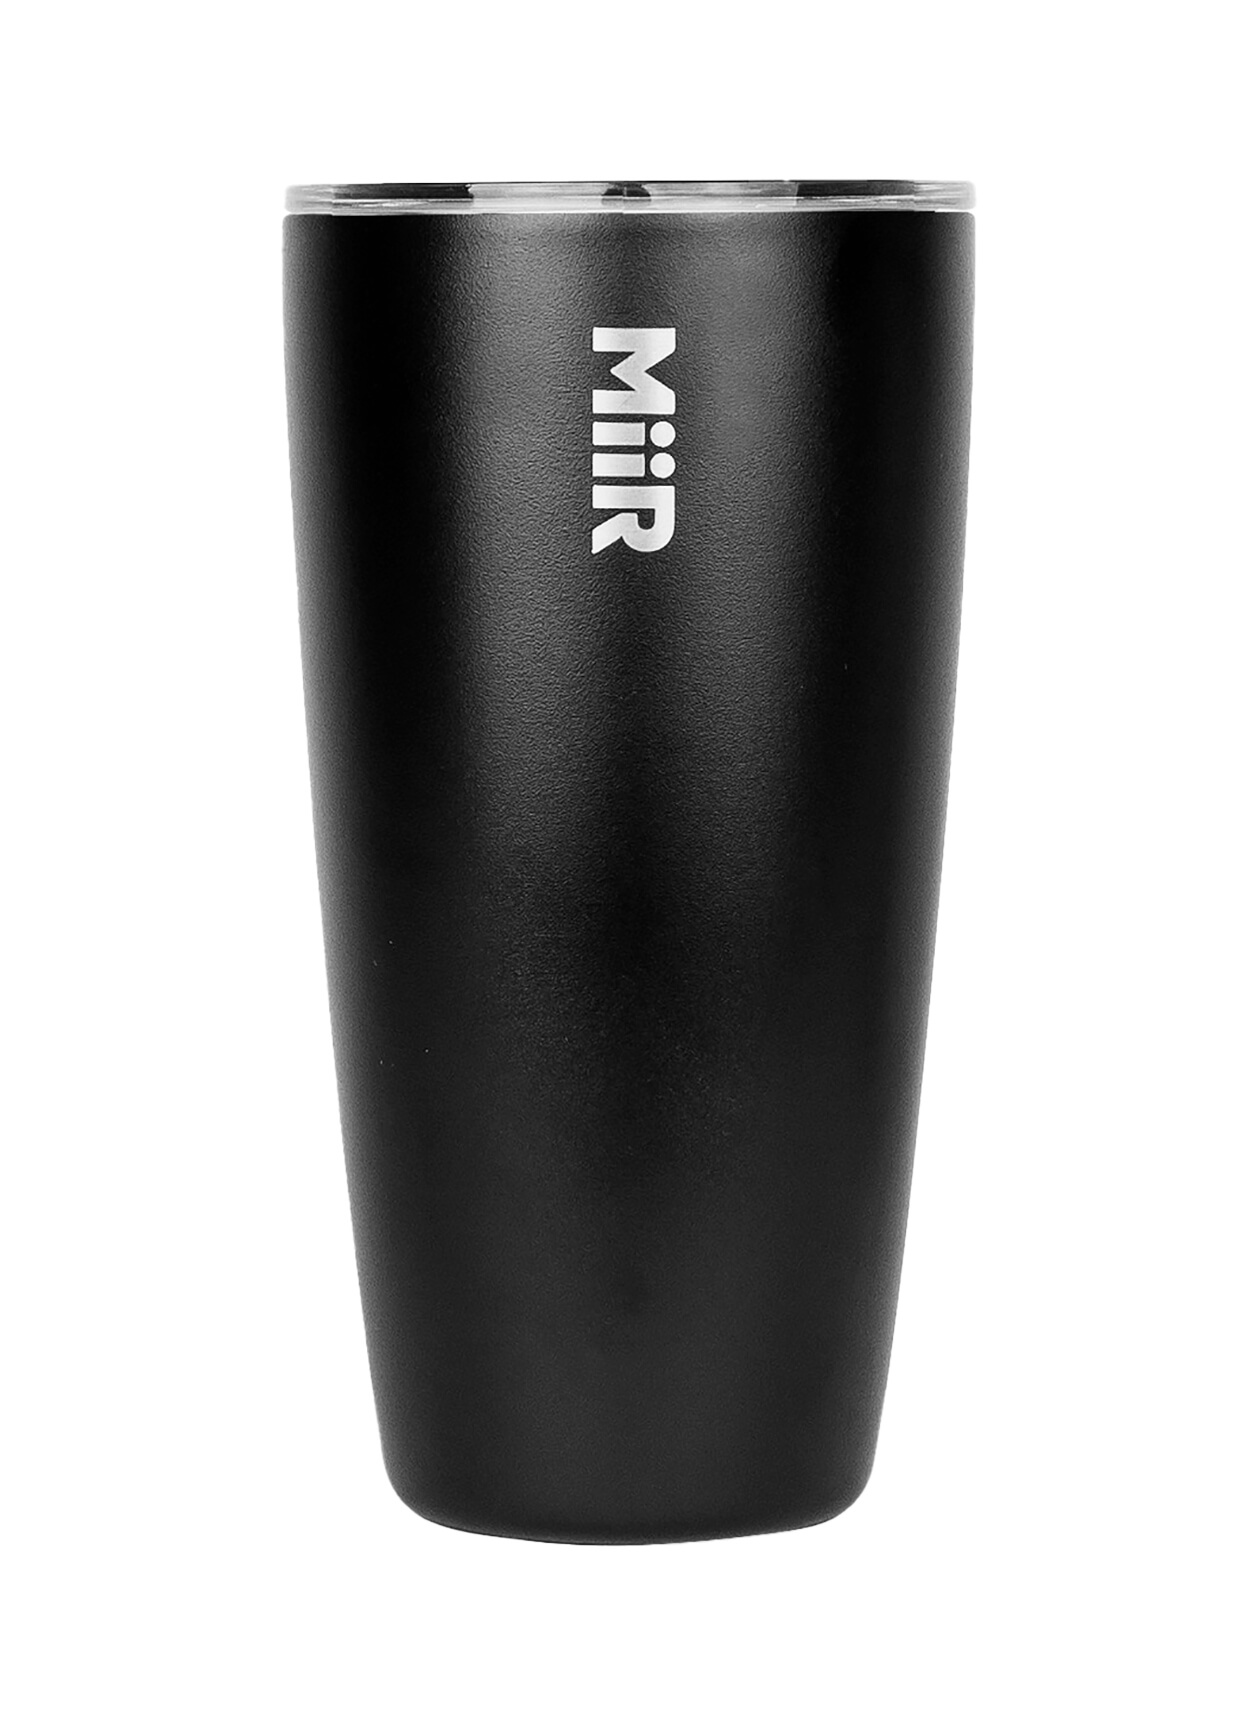 Miir Black Powder Vacuum Insulated Tumbler - 16 oz